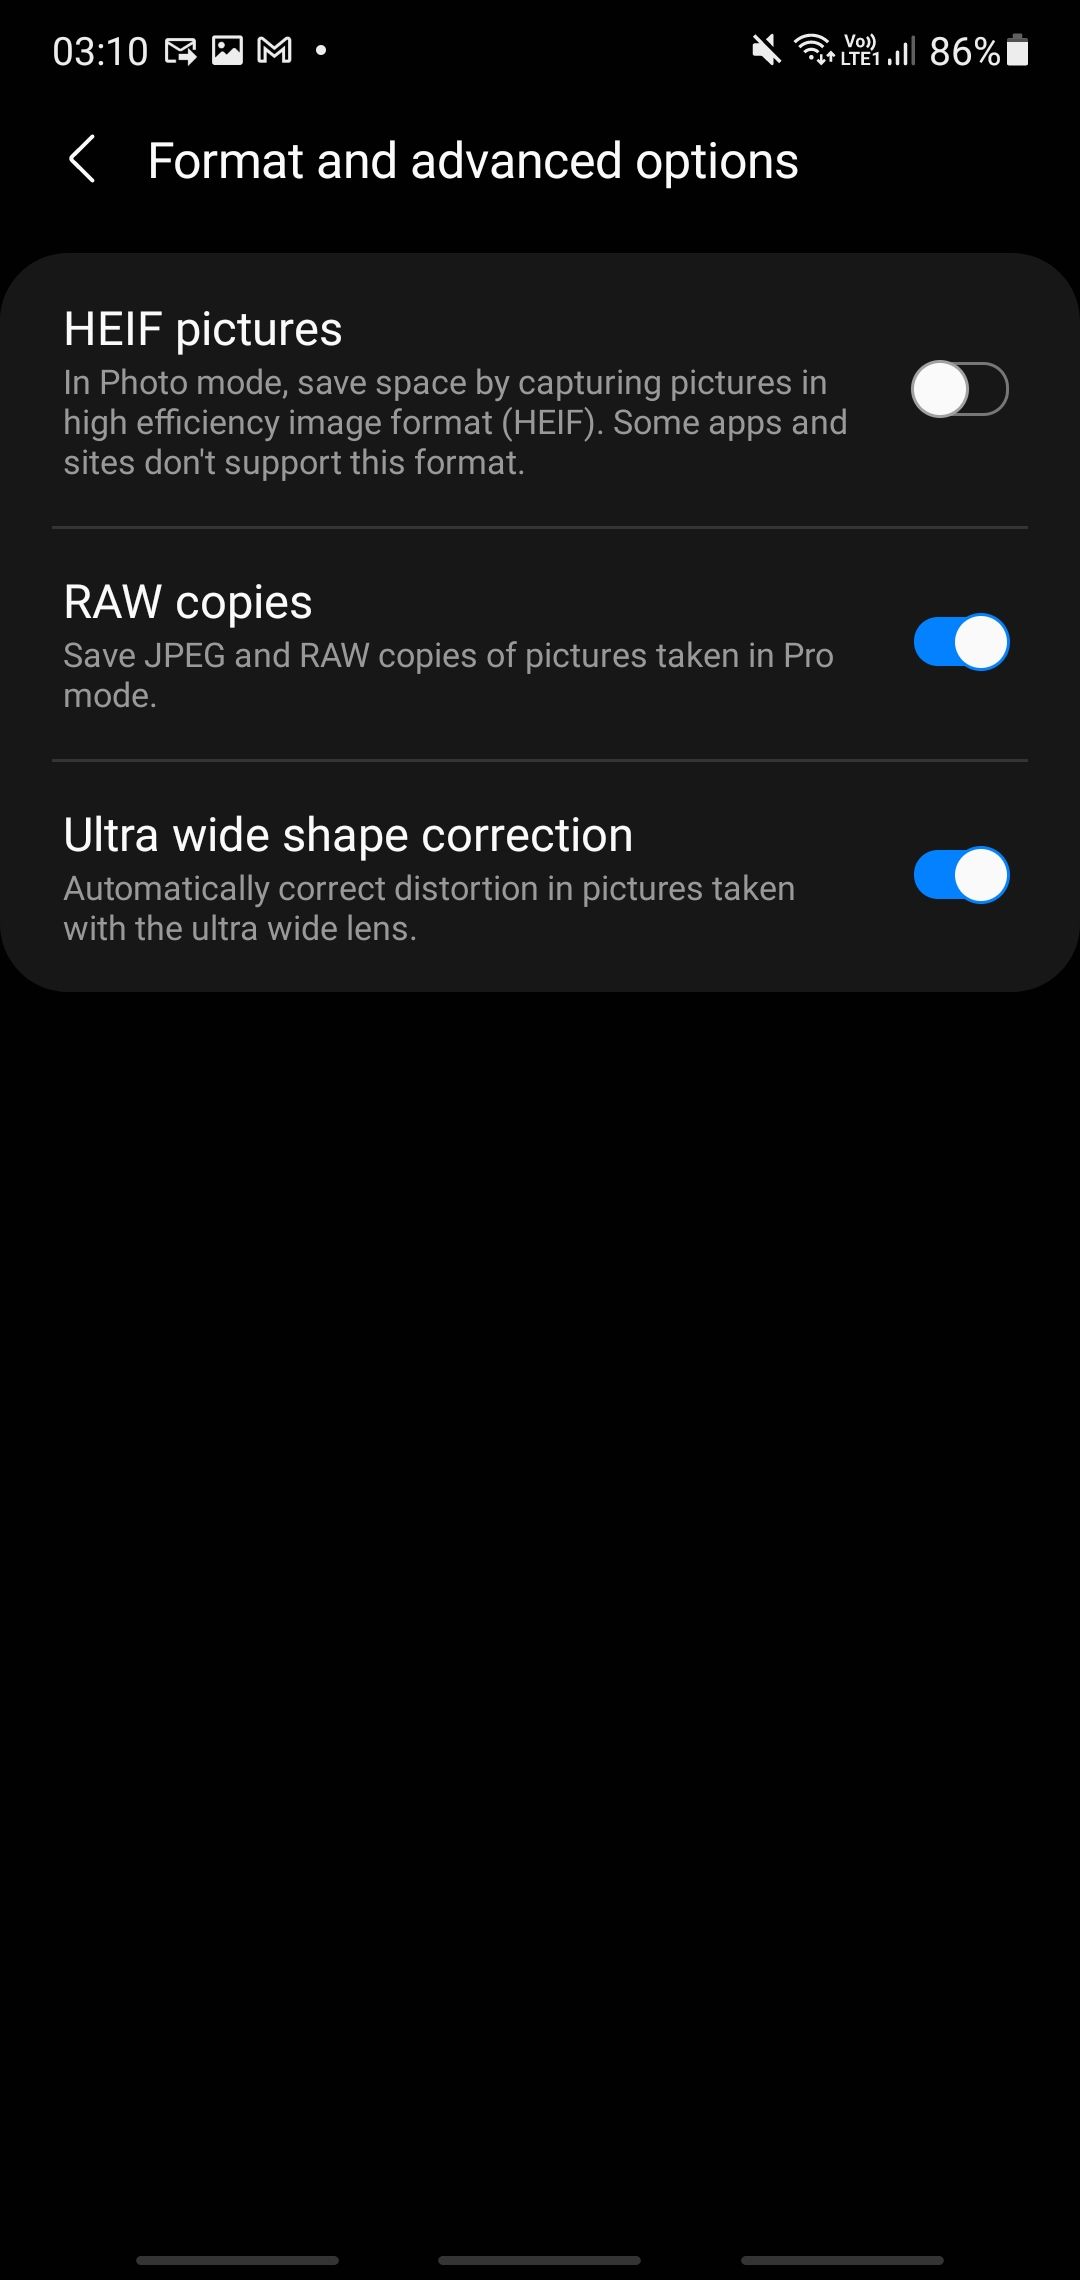 Camera settings screenshot for formatting and advanced options